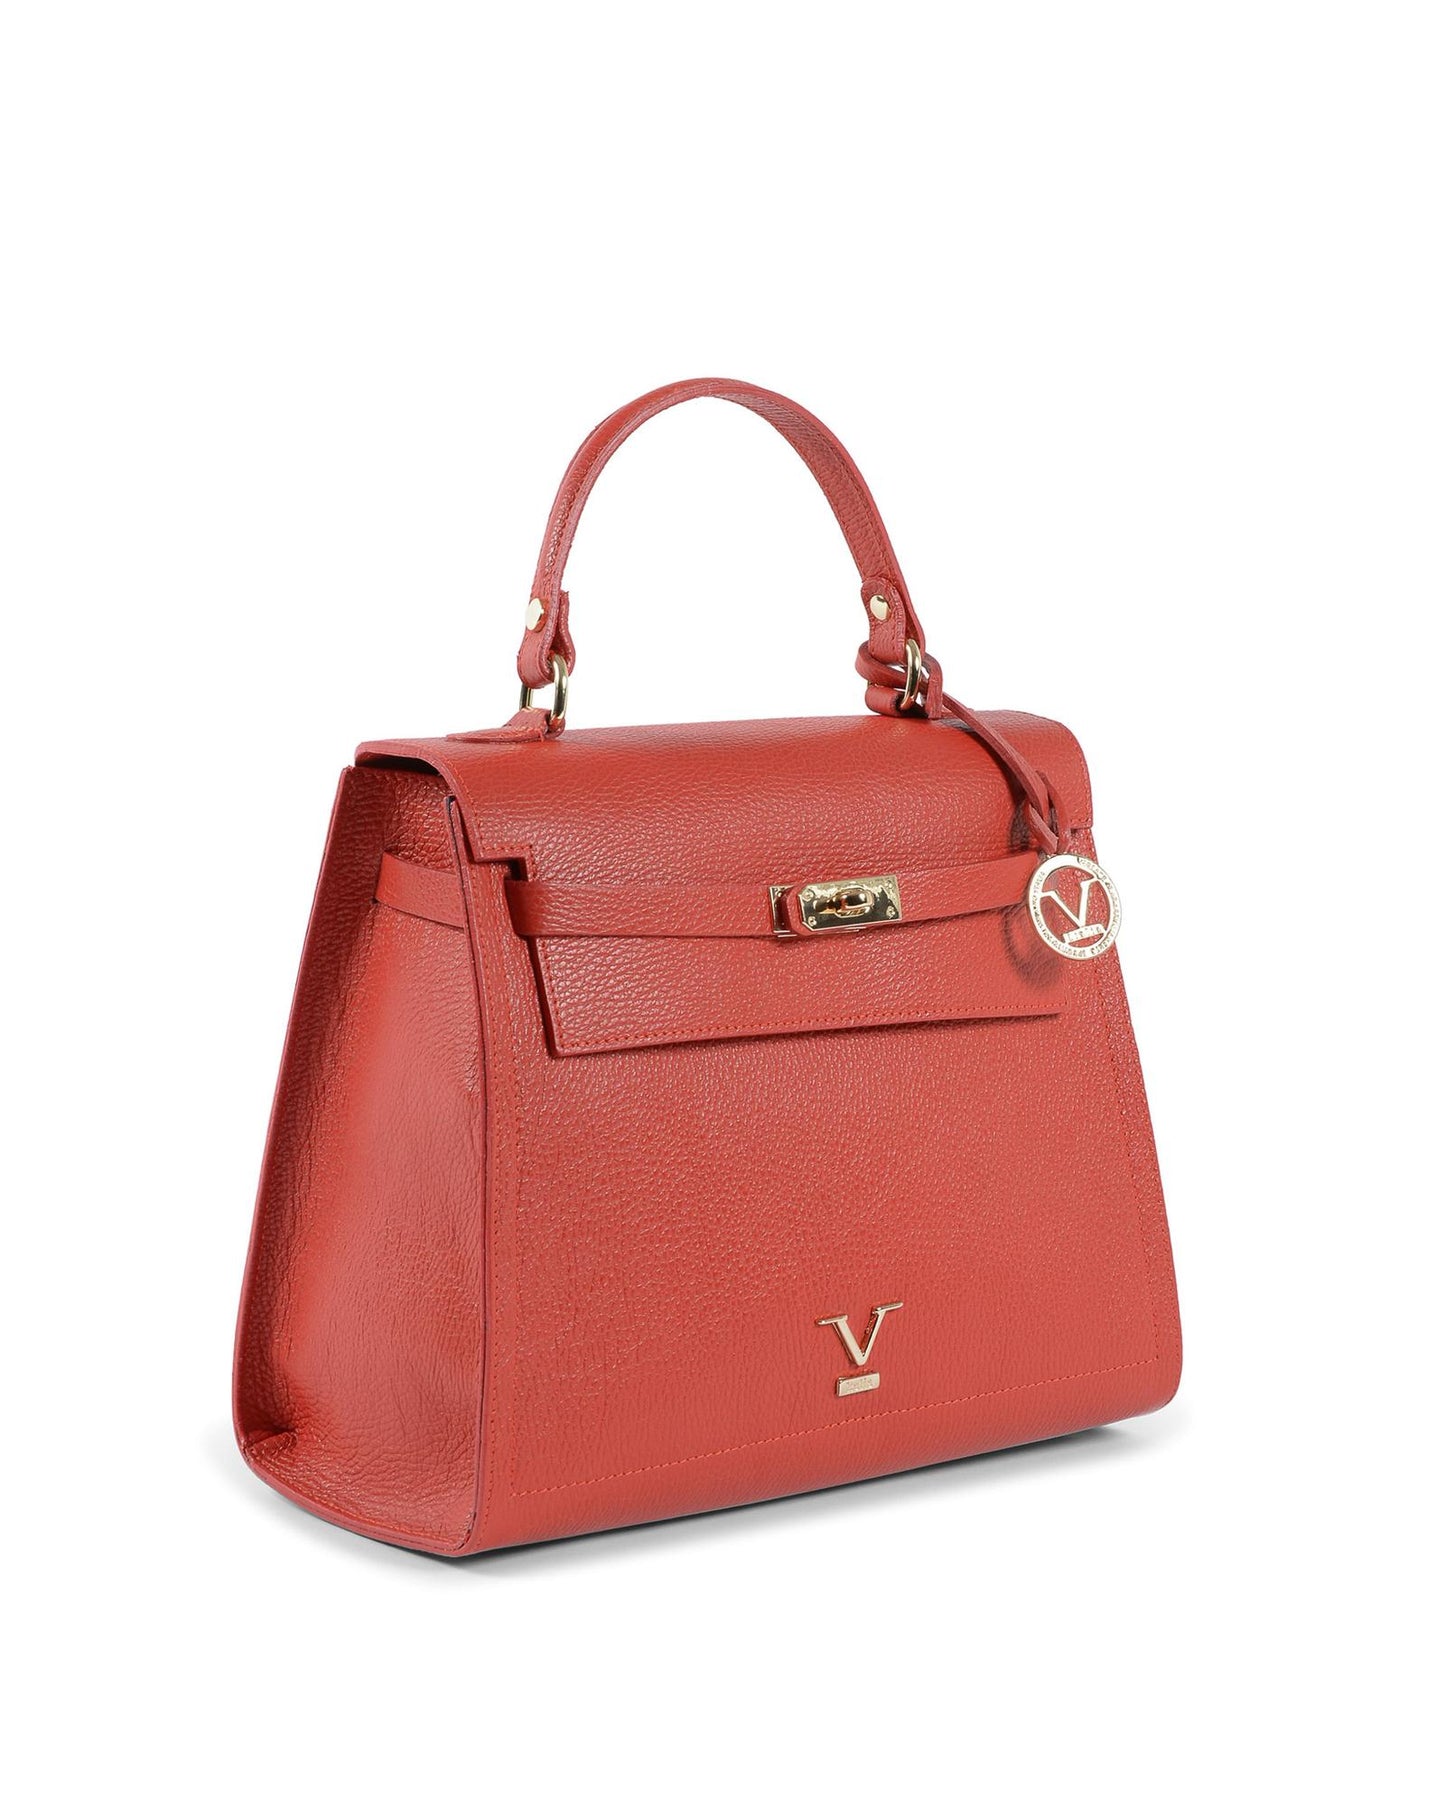 V Italia by Versace 1969 abbigliamento sportivo srl Women's Leather Handbag in Red in Red - One Size